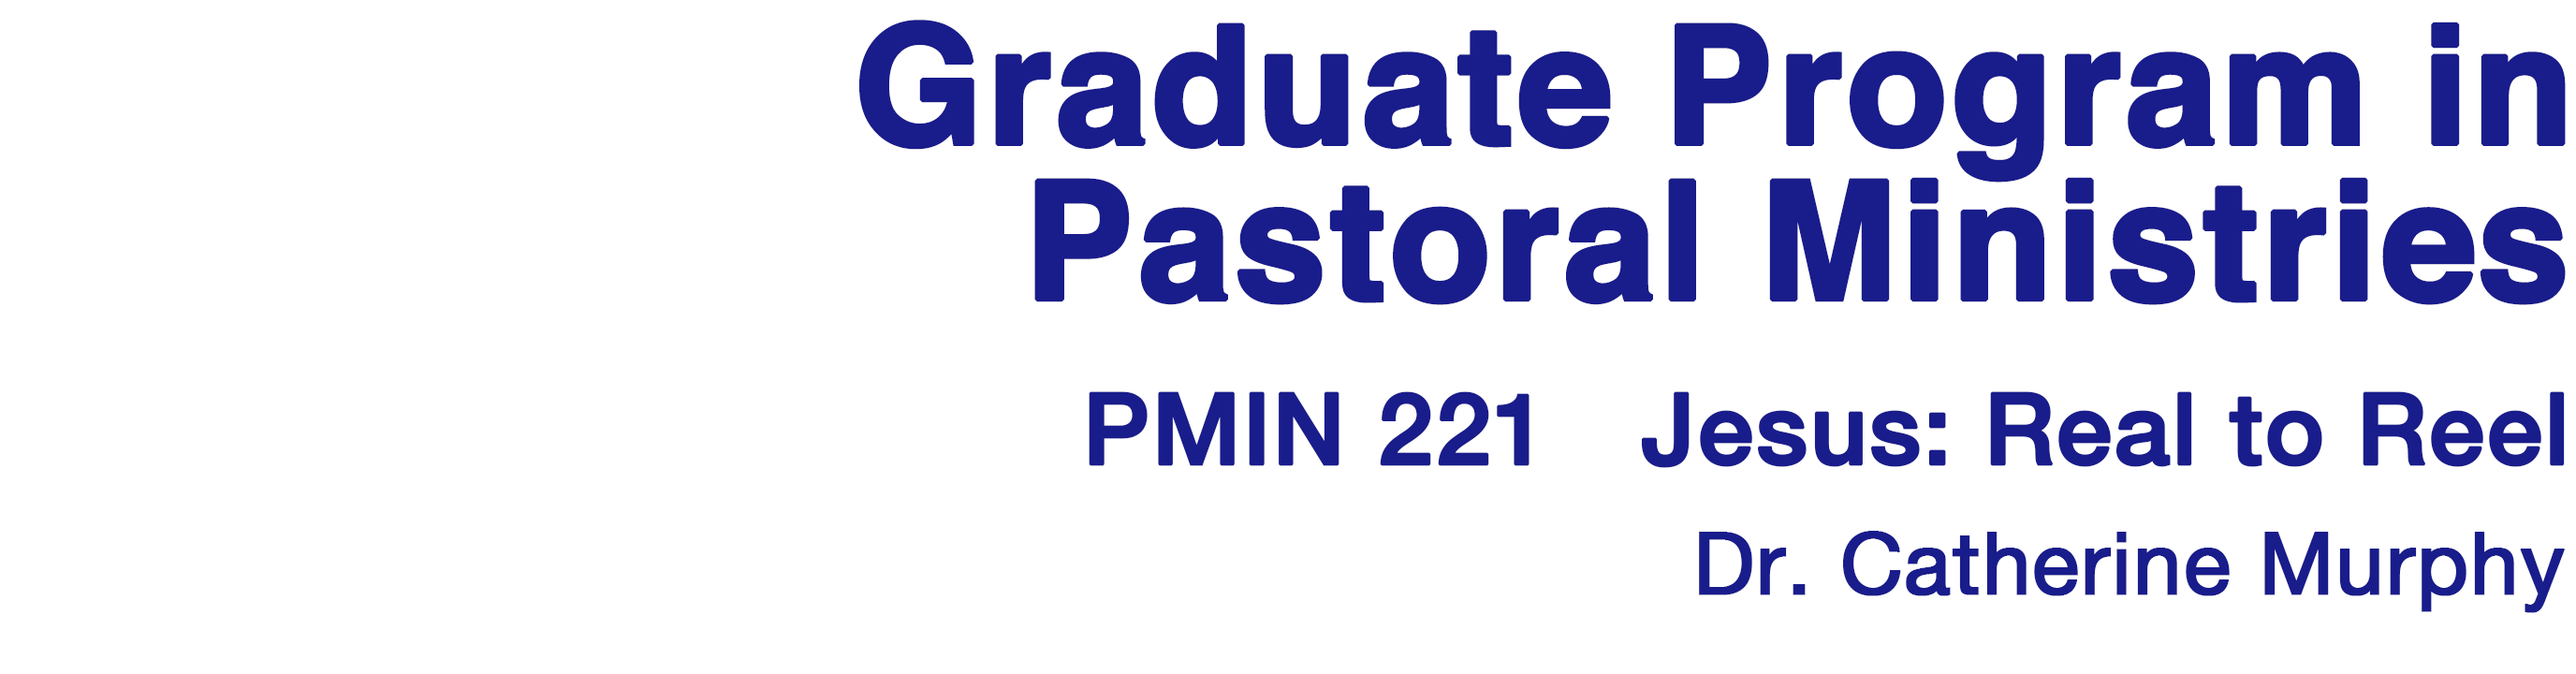 Graduate Program in Pastoral Ministries